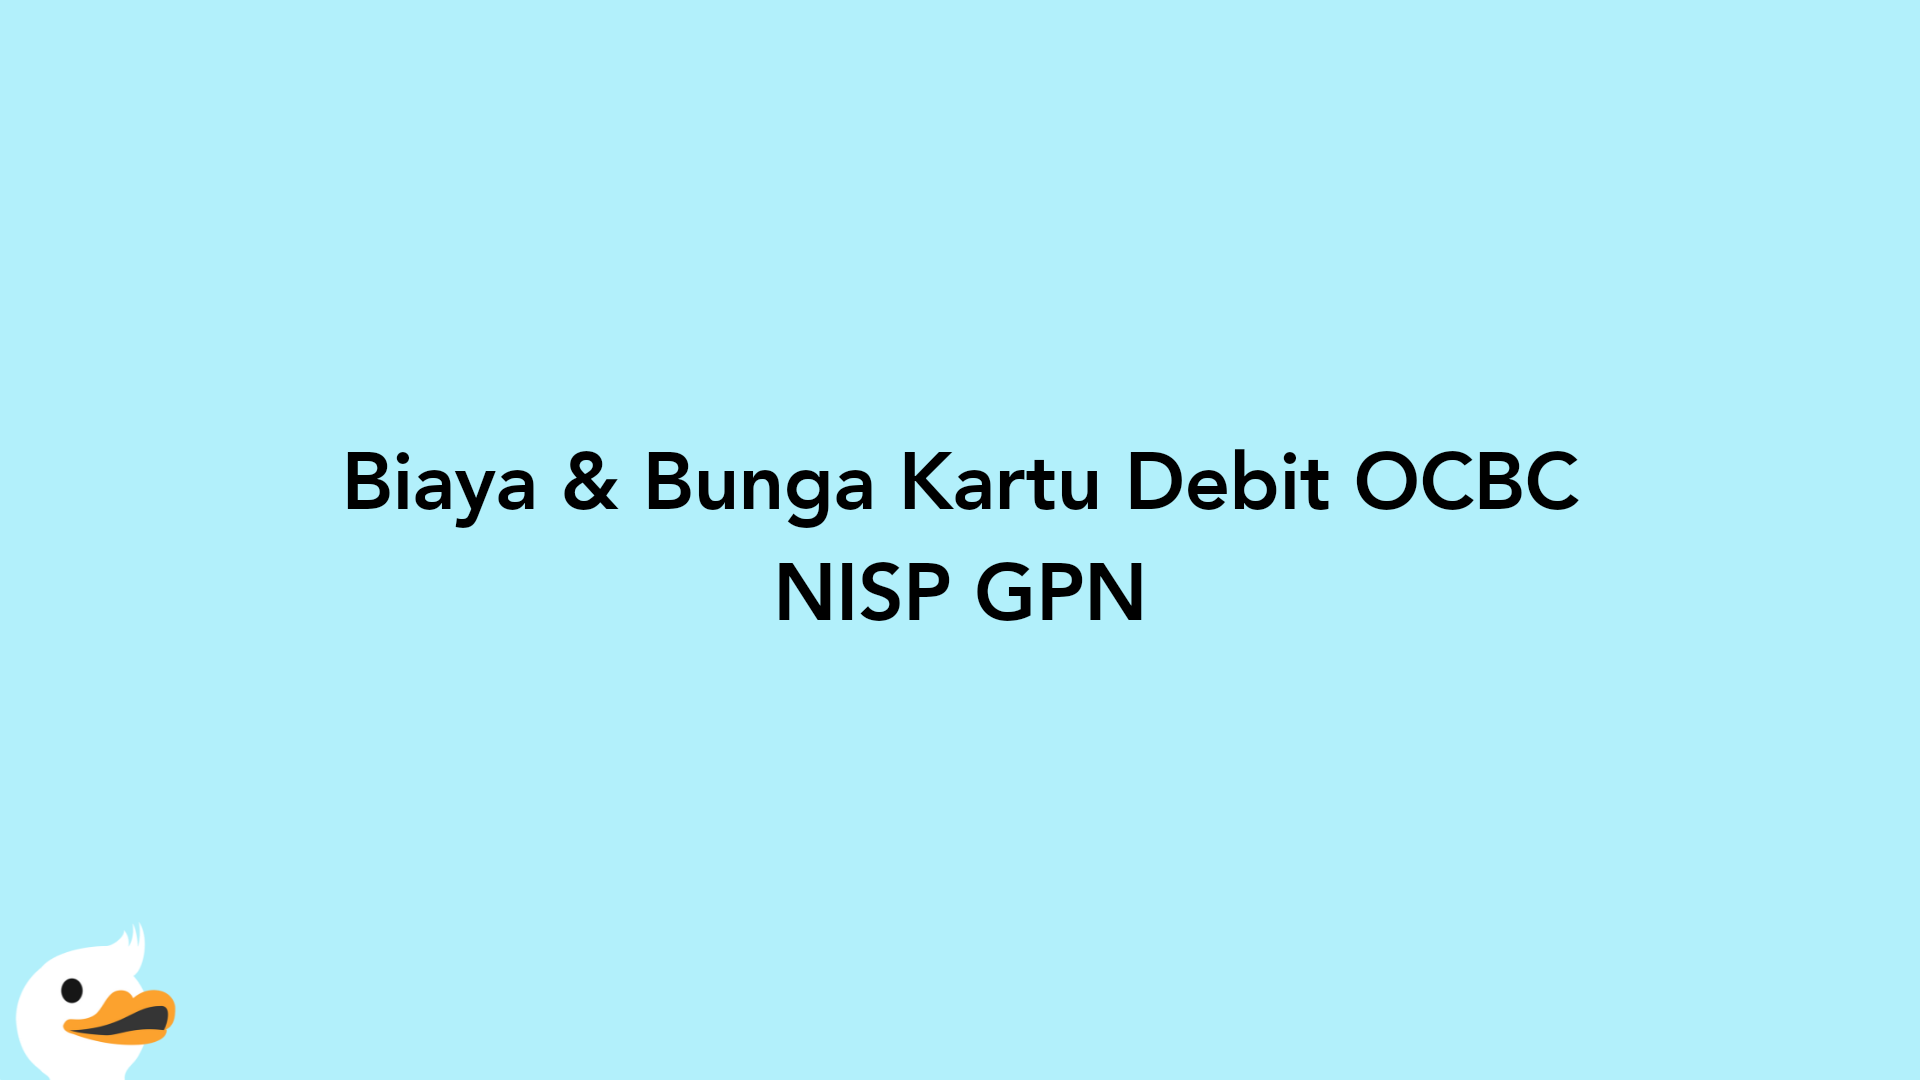 Biaya & Bunga Kartu Debit OCBC NISP GPN